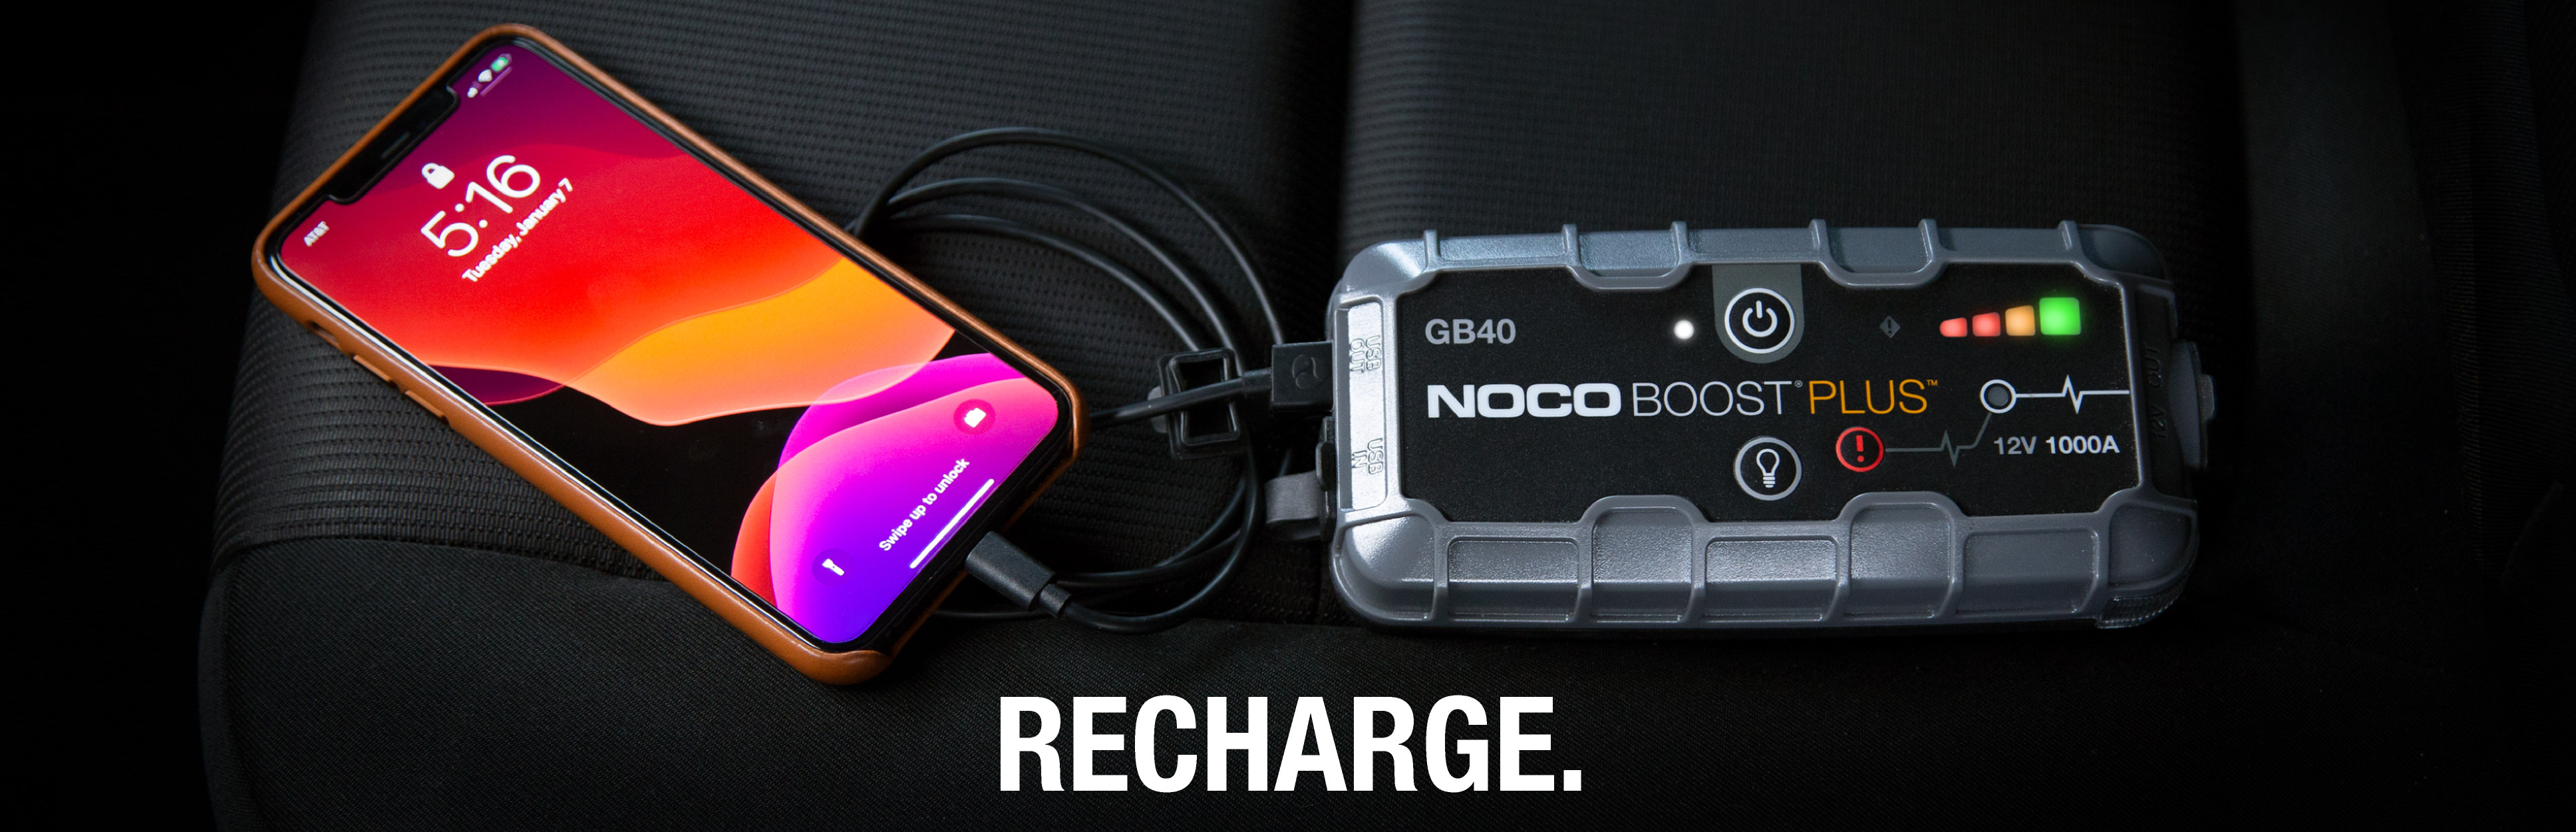 noco-gb40-boost-plus-usb-device-recharge-22x.jpg